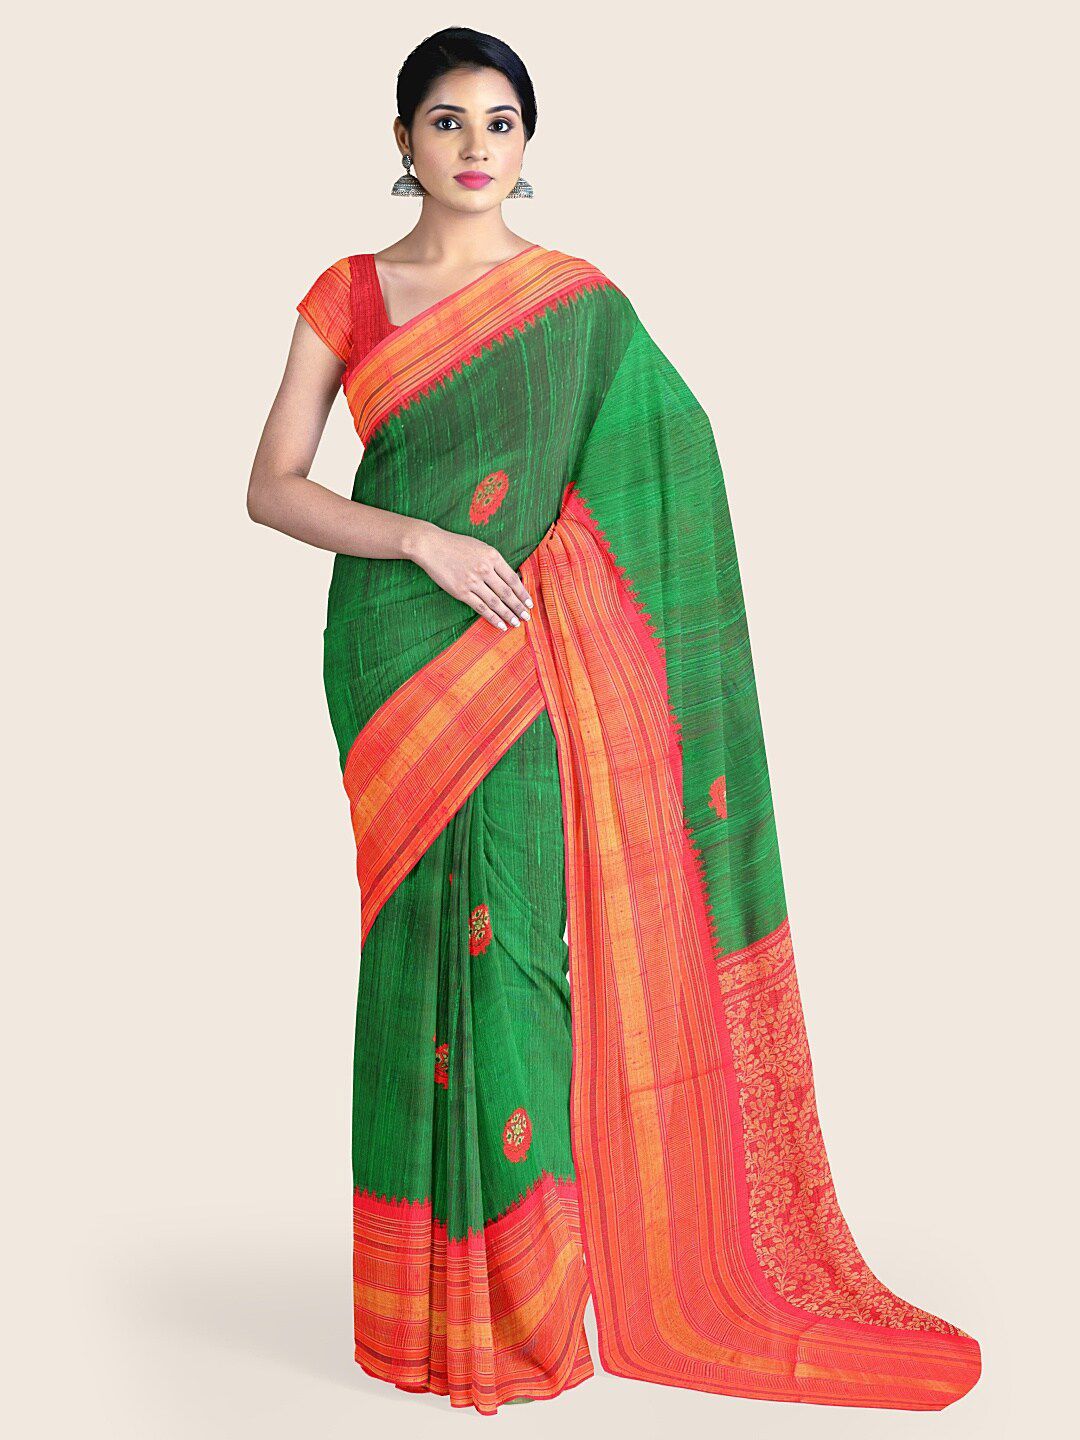 Pothys Green & Red Ethnic Motifs Jute Silk Saree Price in India